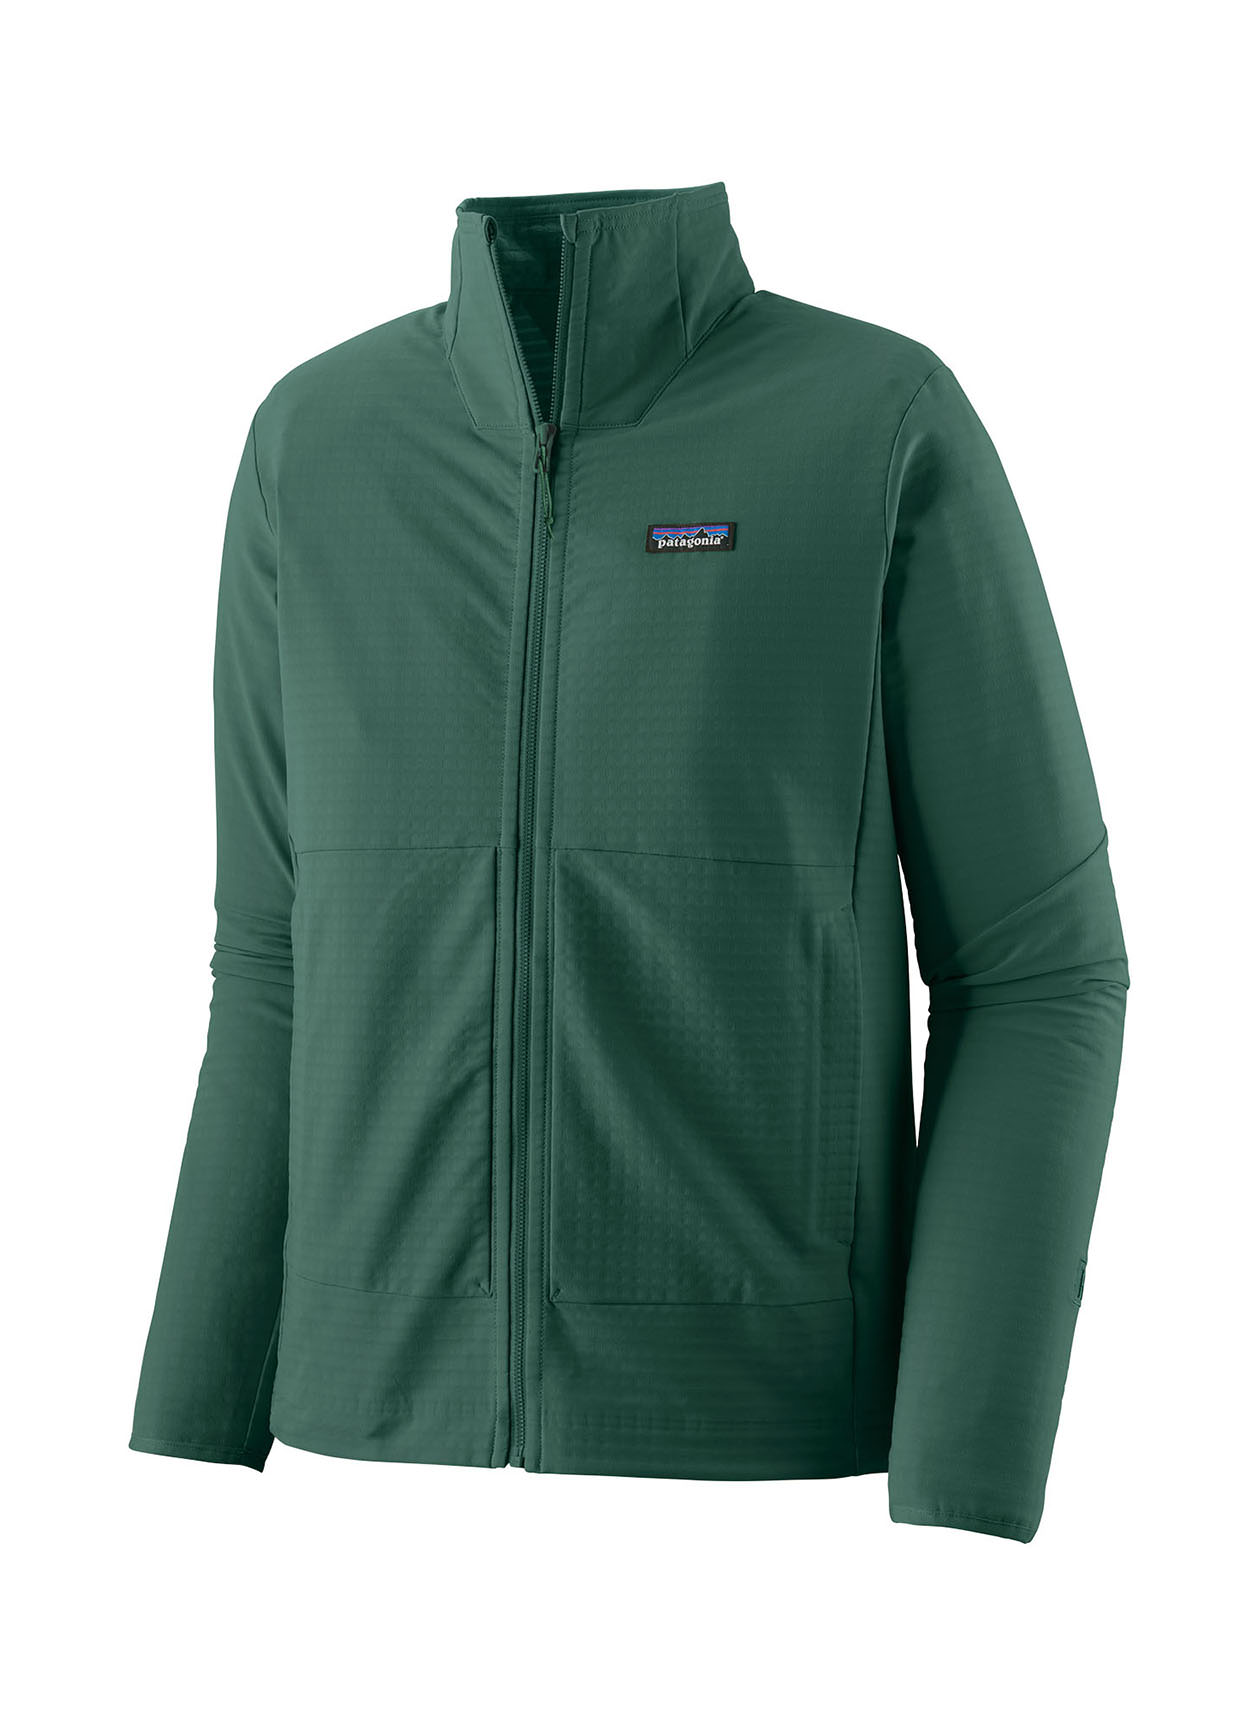 Patagonia Men's Conifer Green R1 TechFace Jacket